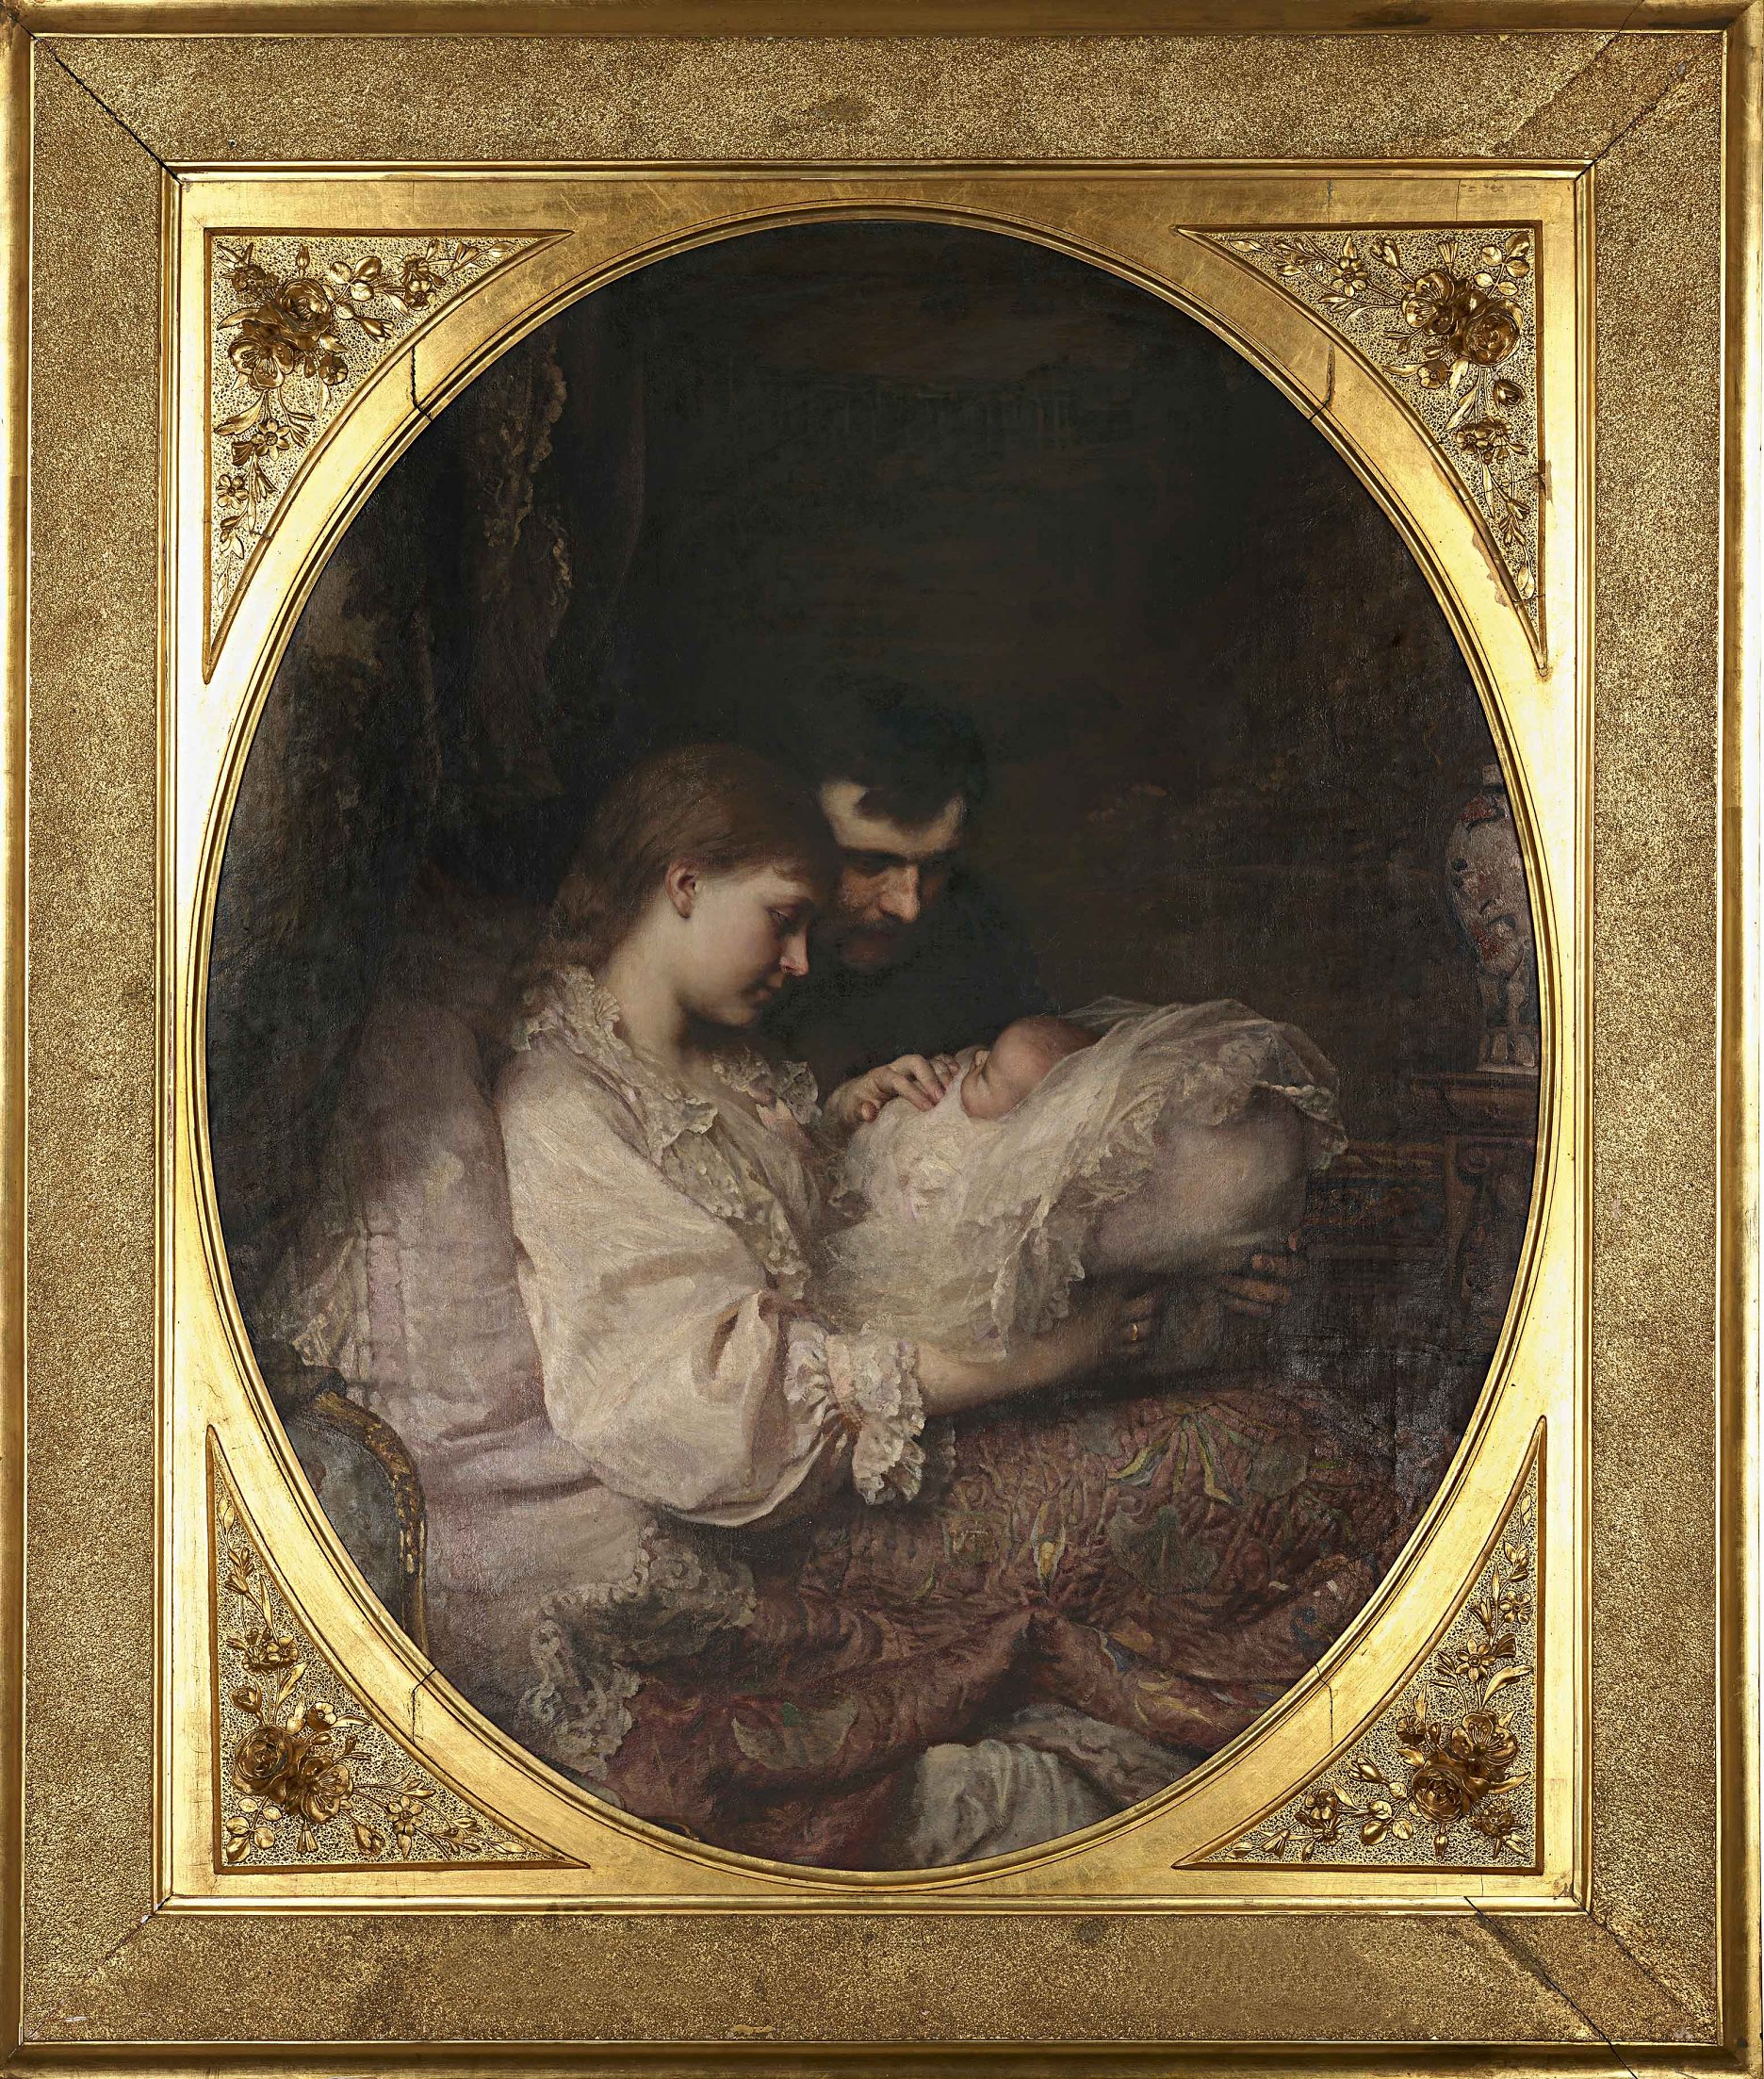 Leopold Horovitz: Prvorodený. 1885. Olej, plátno. Múzeum vo Sv. Antone, Sv. Anton